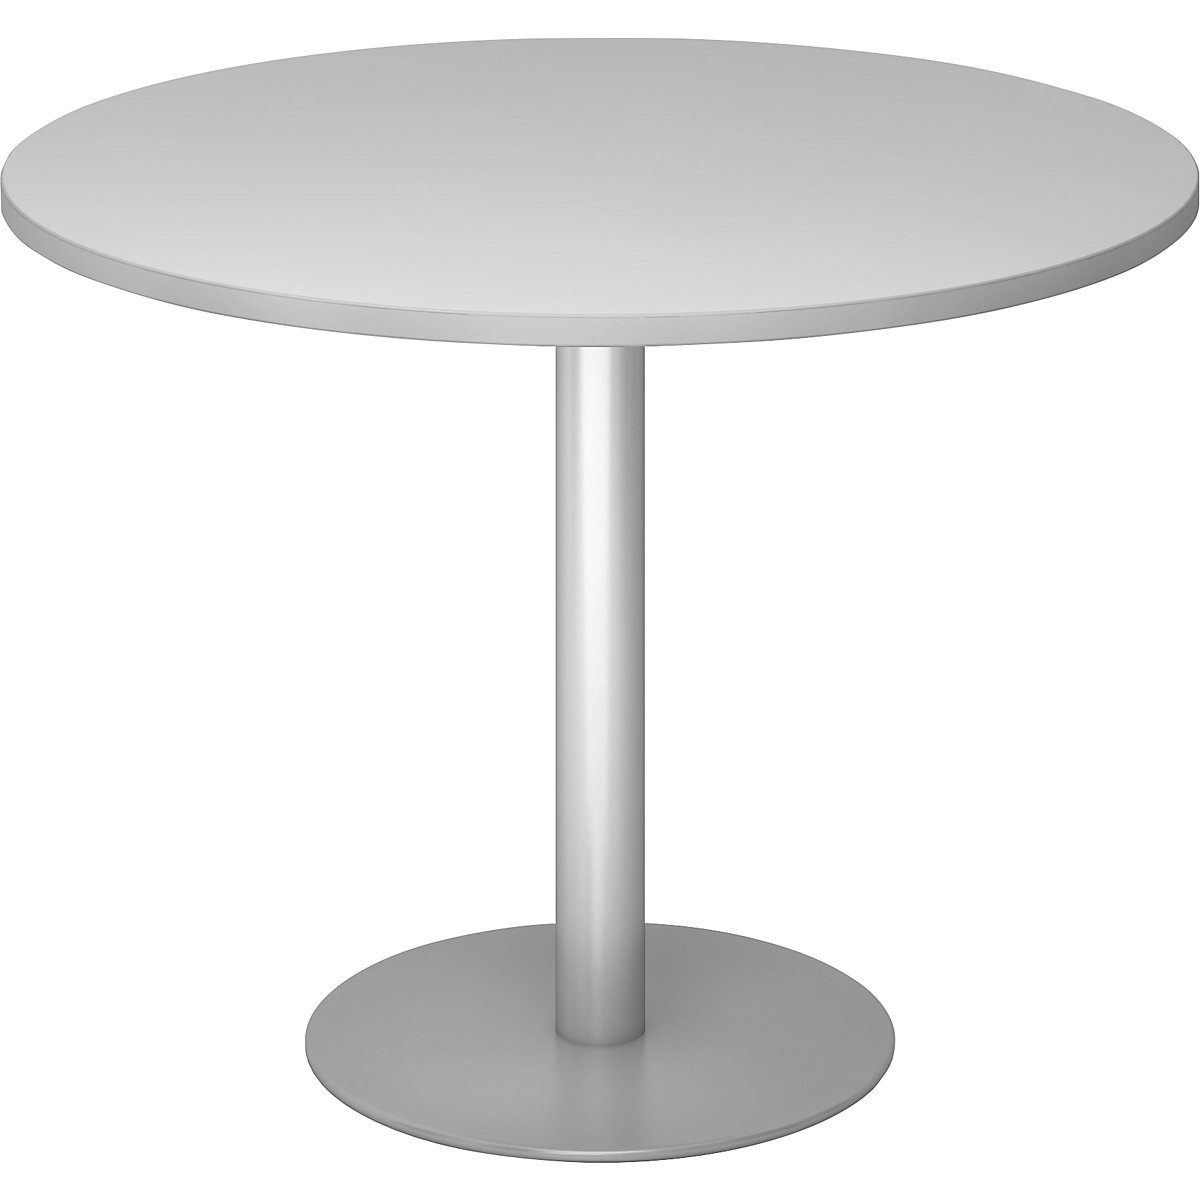 Vergadertafel, Ø 1000 mm, 755 mm hoog, frame zilverkleurig, blad lichtgrijs-4